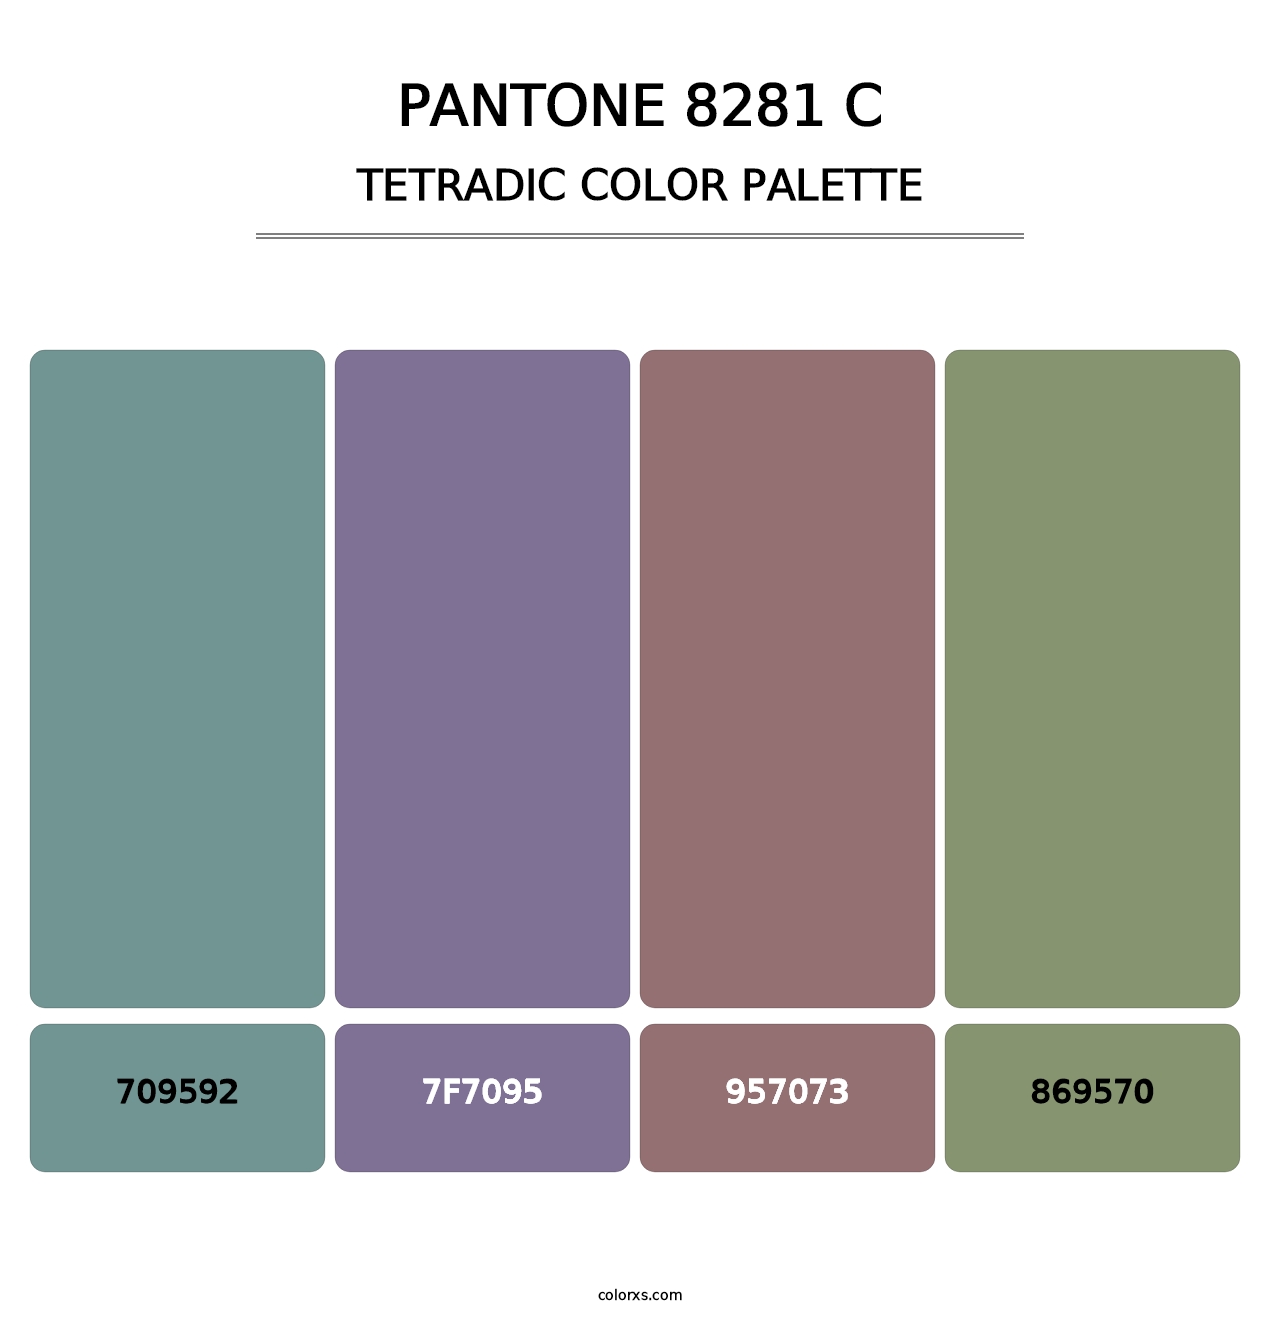 PANTONE 8281 C - Tetradic Color Palette